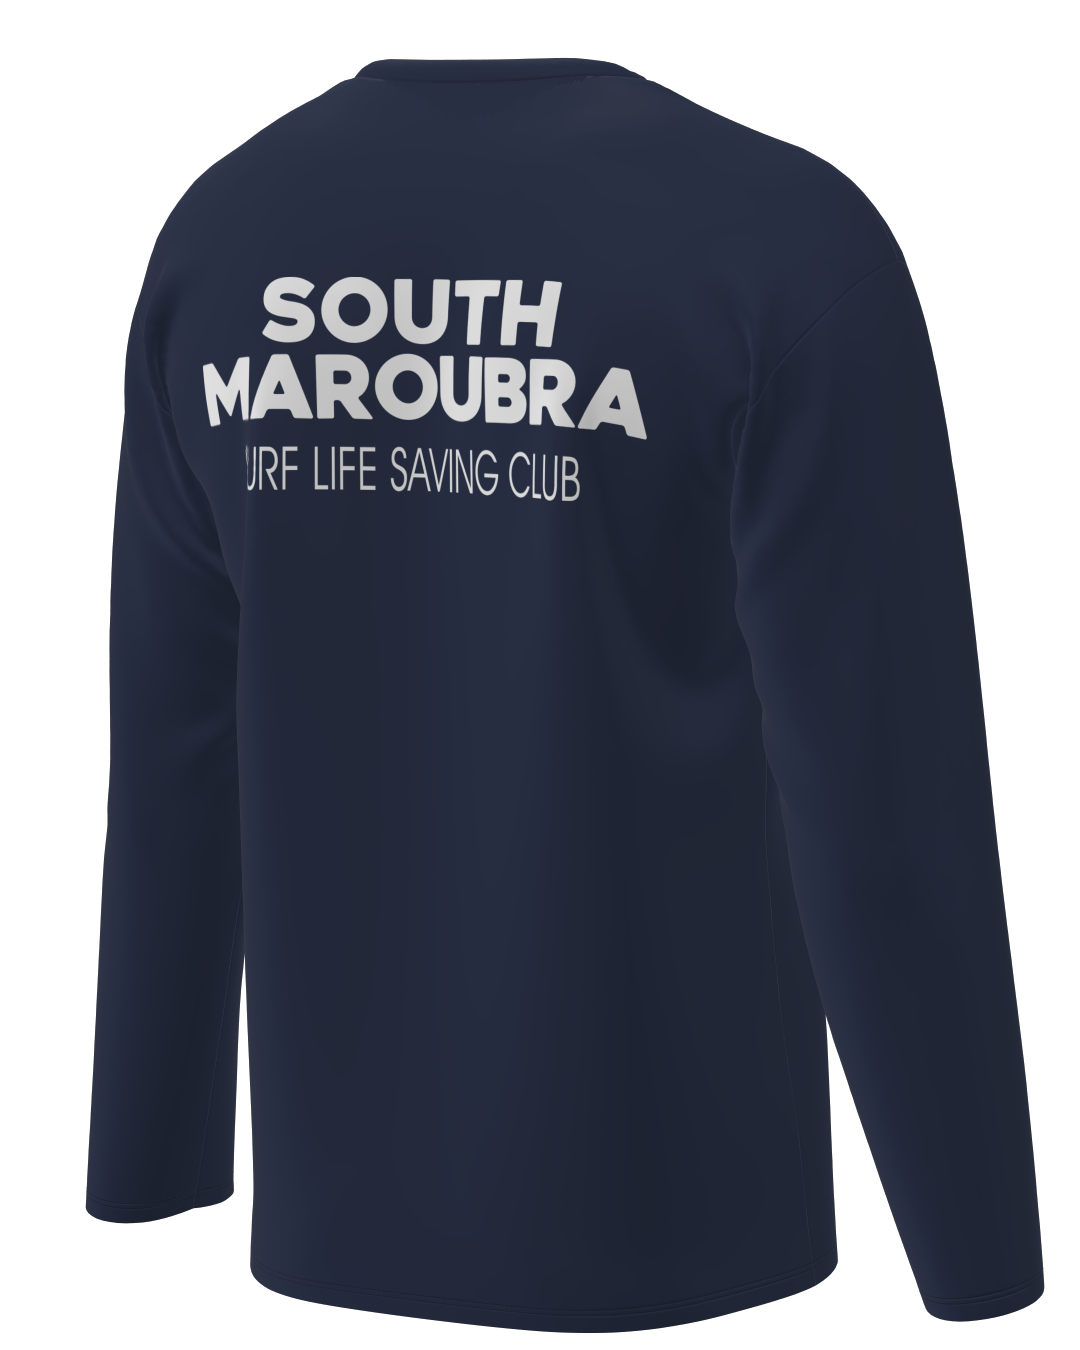 South Maroubra SLSC Long Sleeve Cotton shirt -Crew Neck